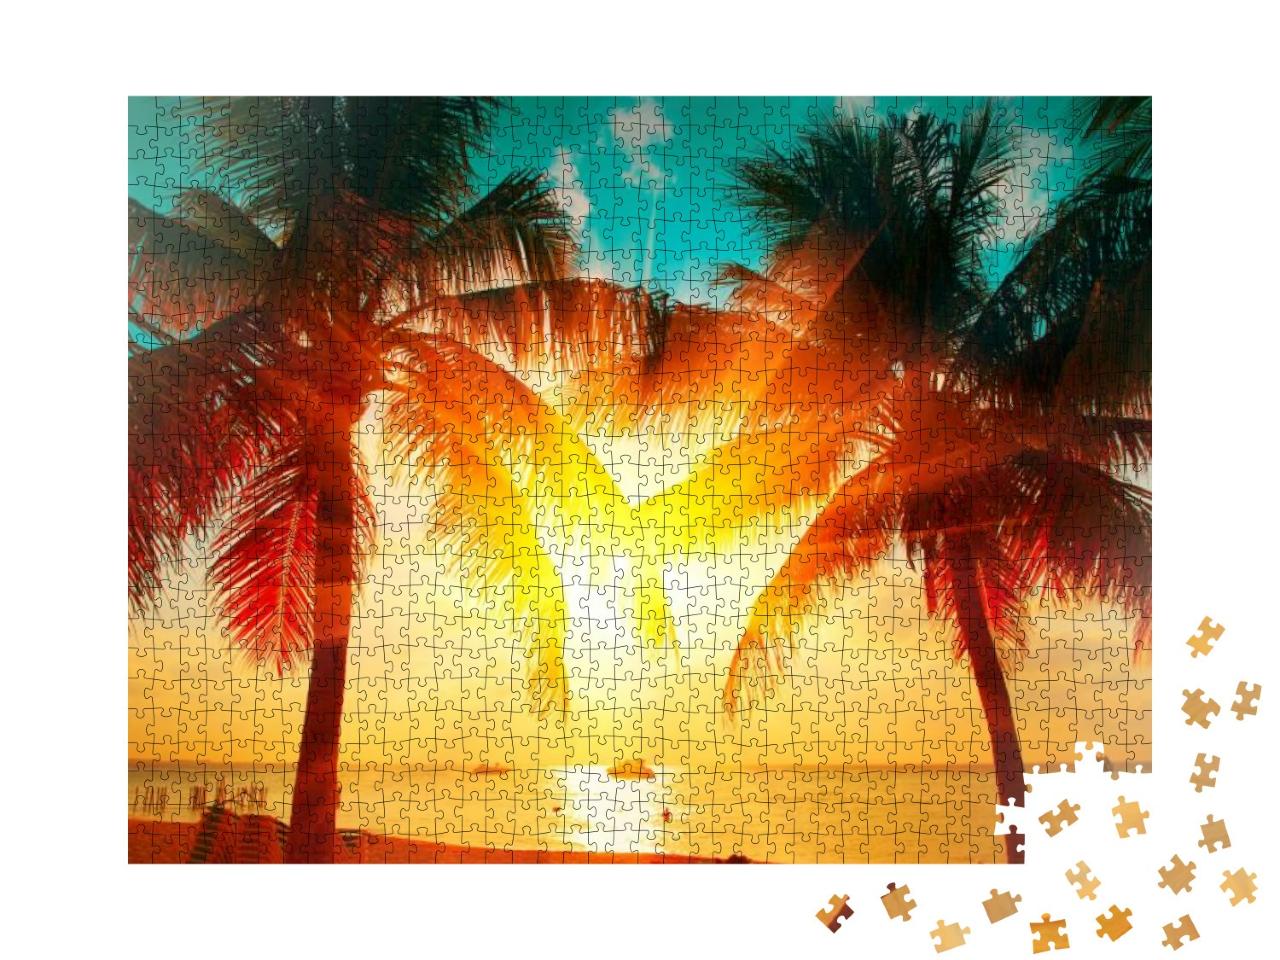 Puzzle 1000 Teile „Sonnenuntergang am Palmenstrand“